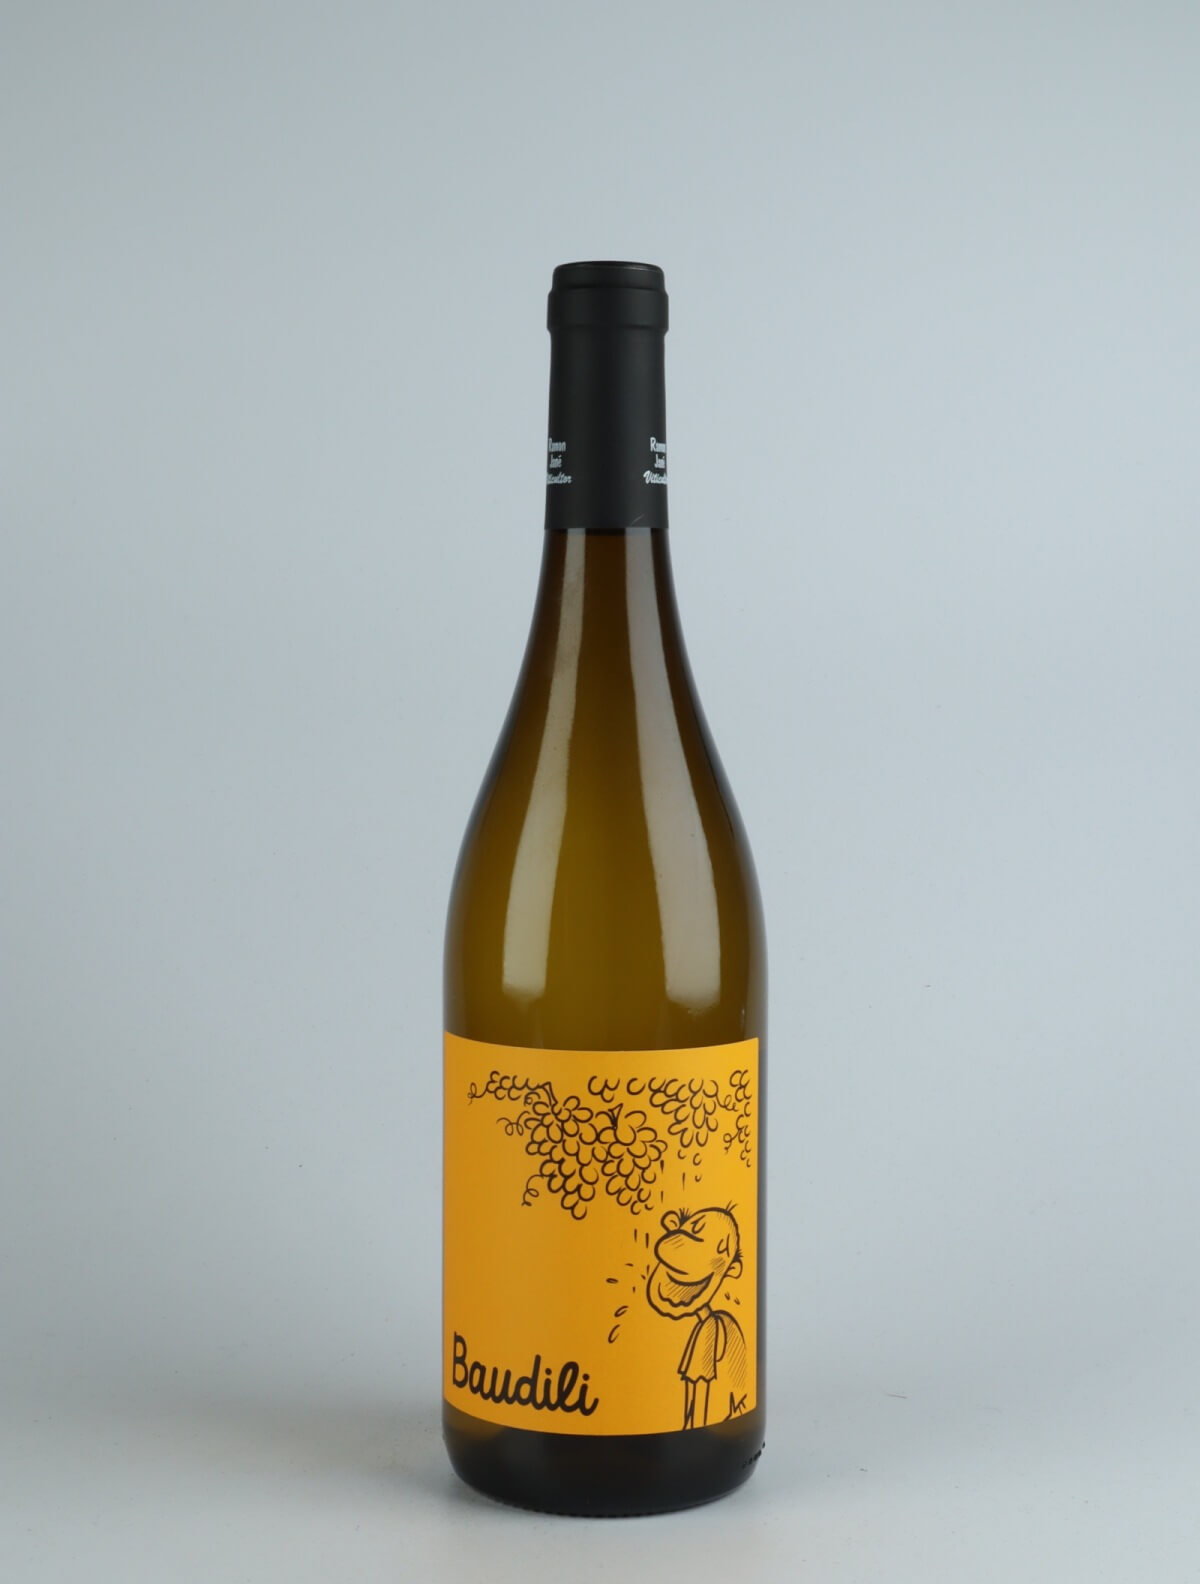 A bottle 2020 Baudili White wine from Mas Candí, Penedès in Spain